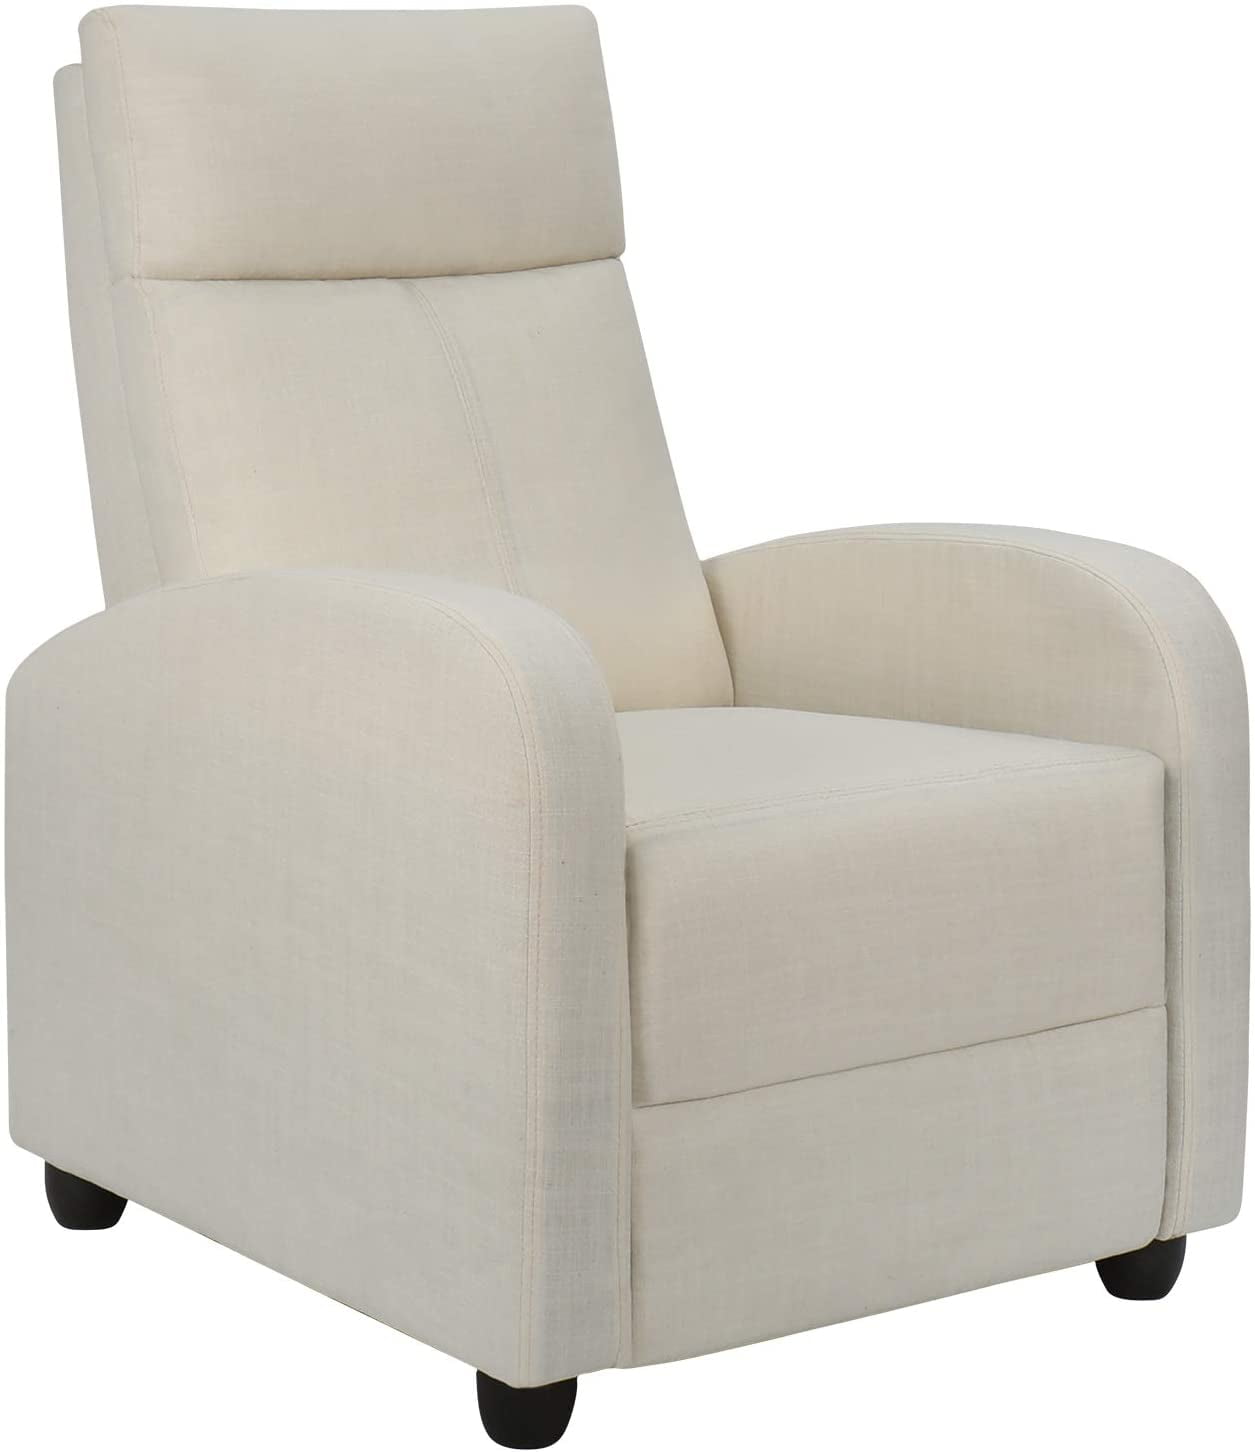 Homall Fabric Recliner Chair Adjustable Modern Home